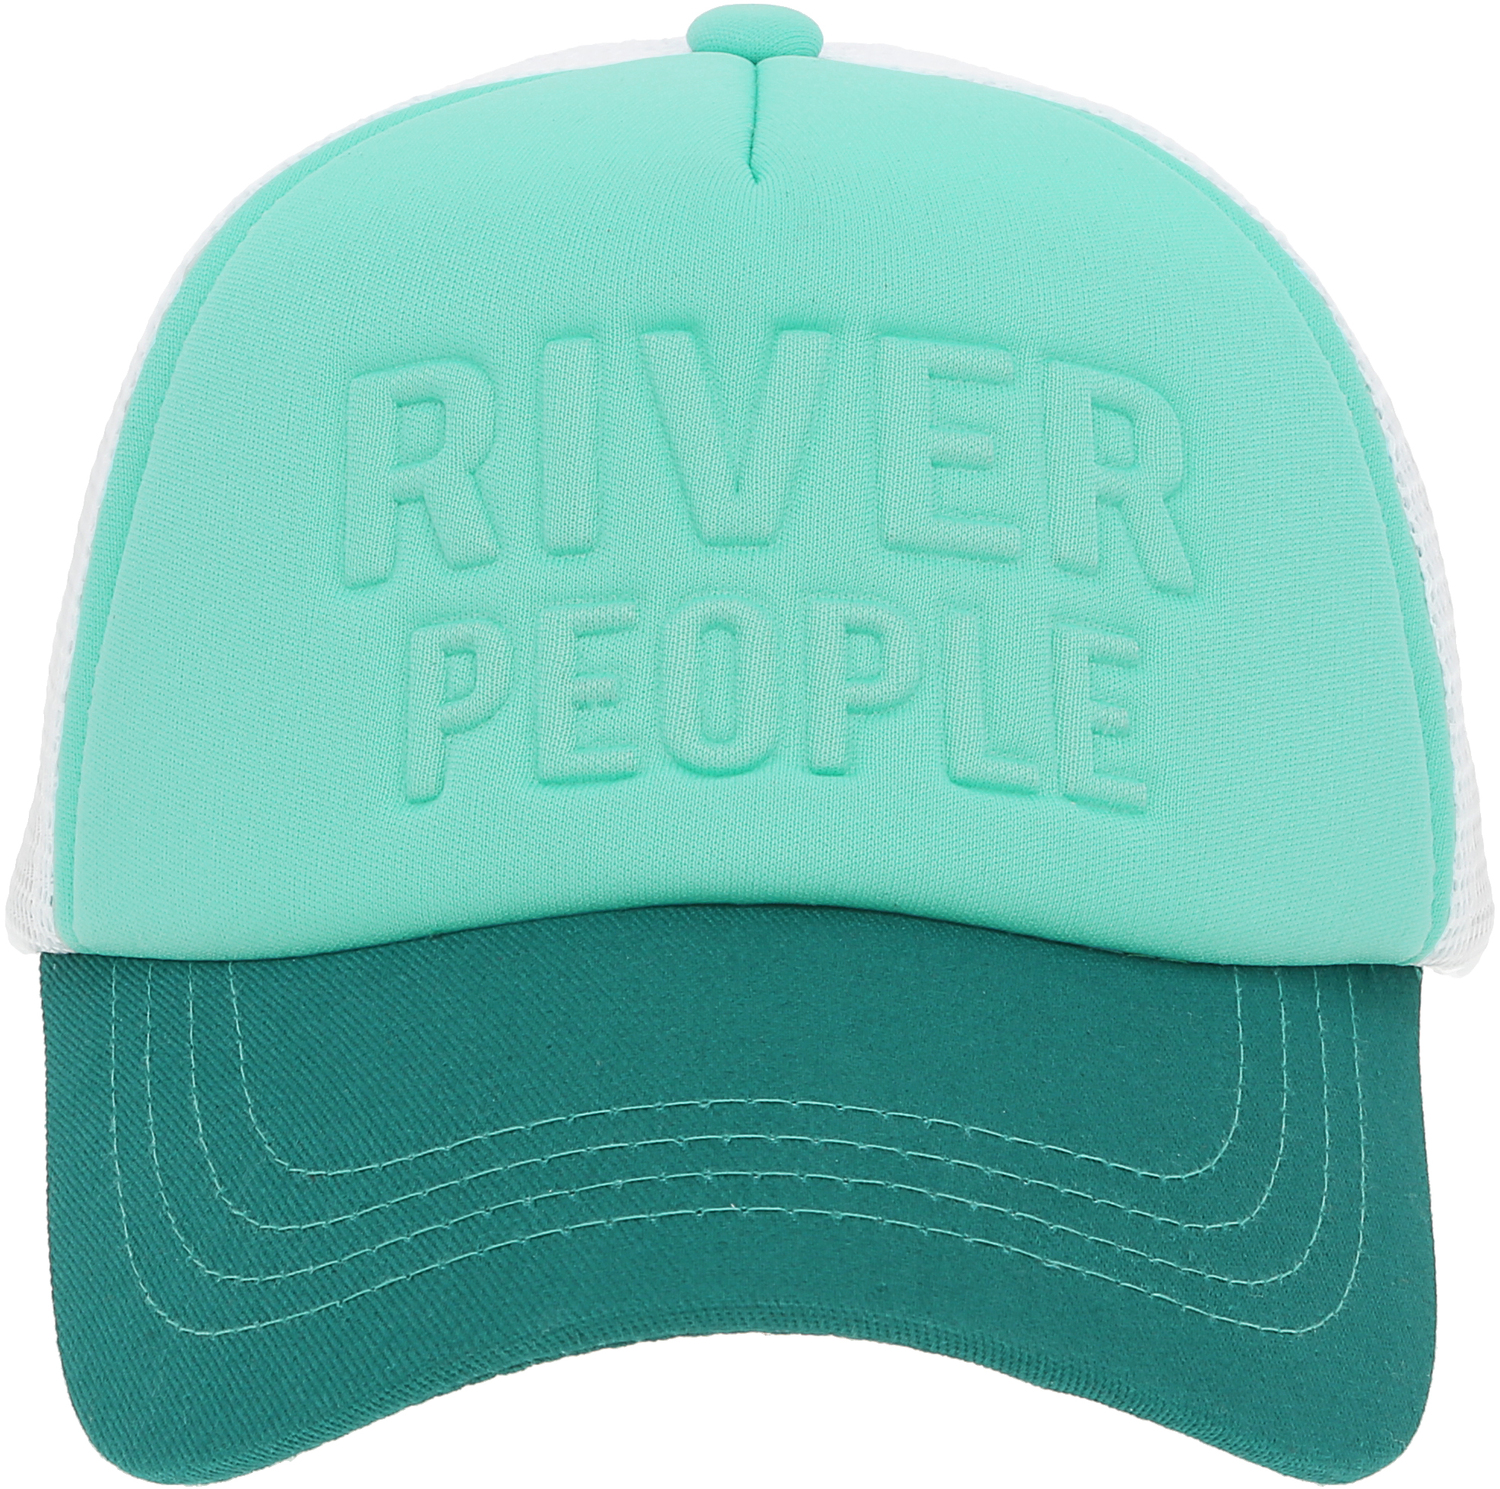 River People by We People - River People - Adjustable Turquoise Neoprene Mesh Hat